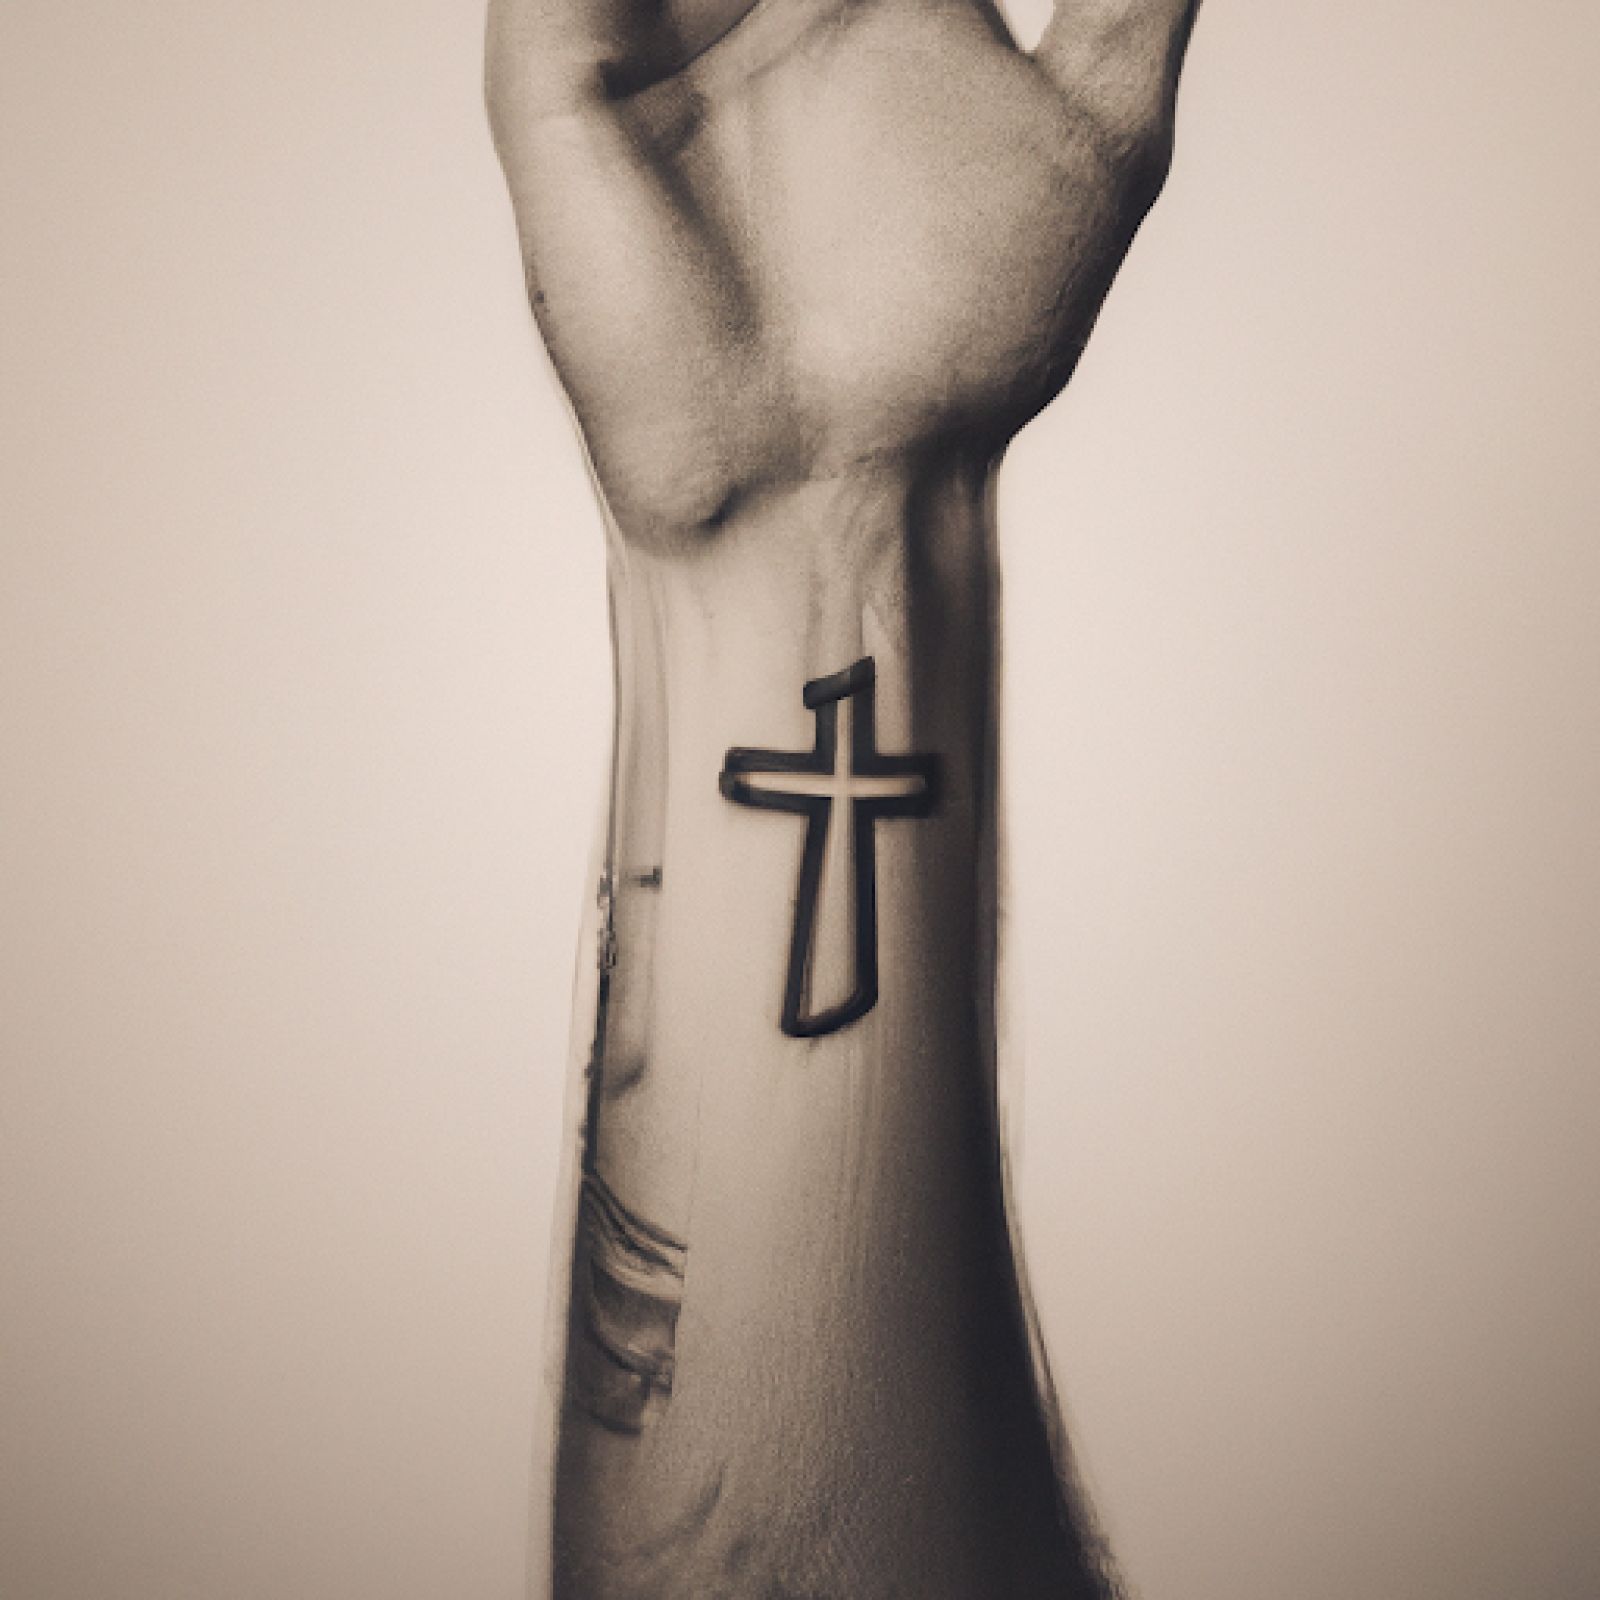 Jesus tattoo on hand for men